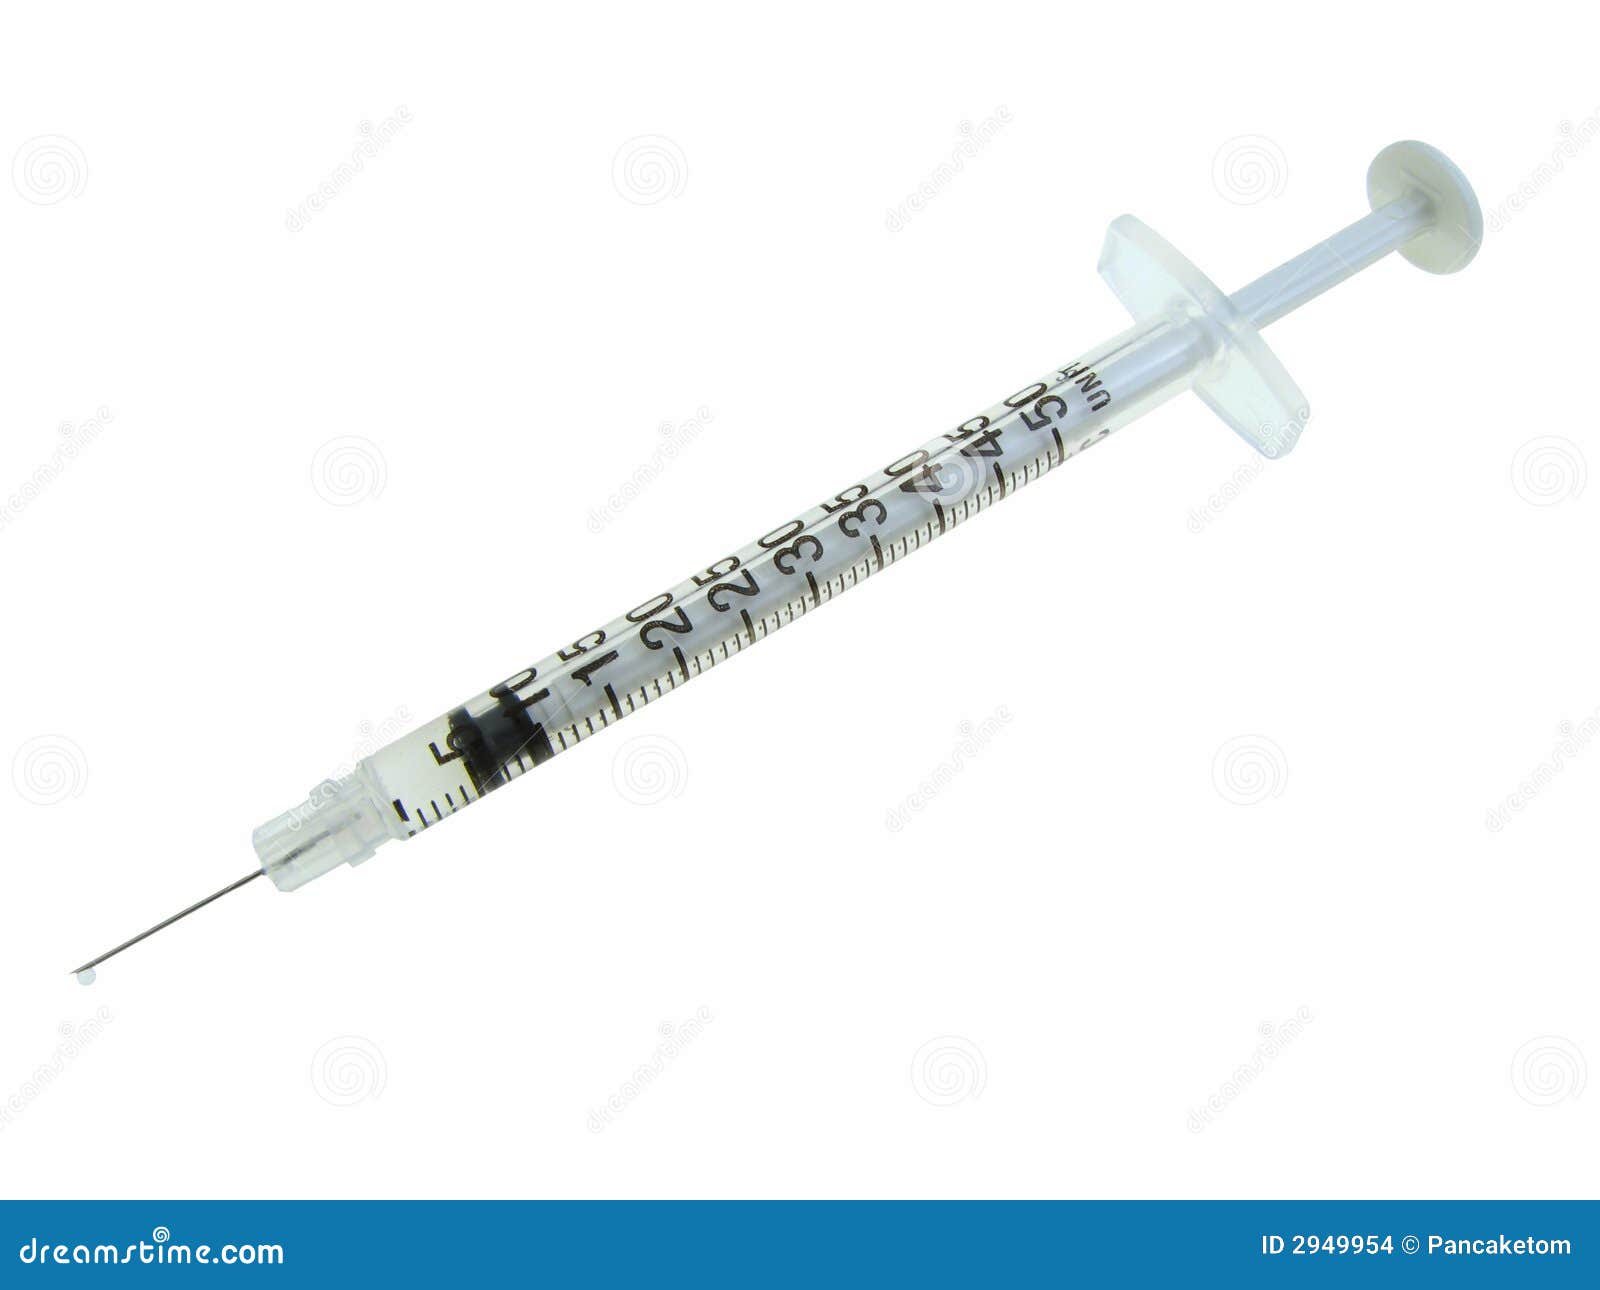  insulin syringe